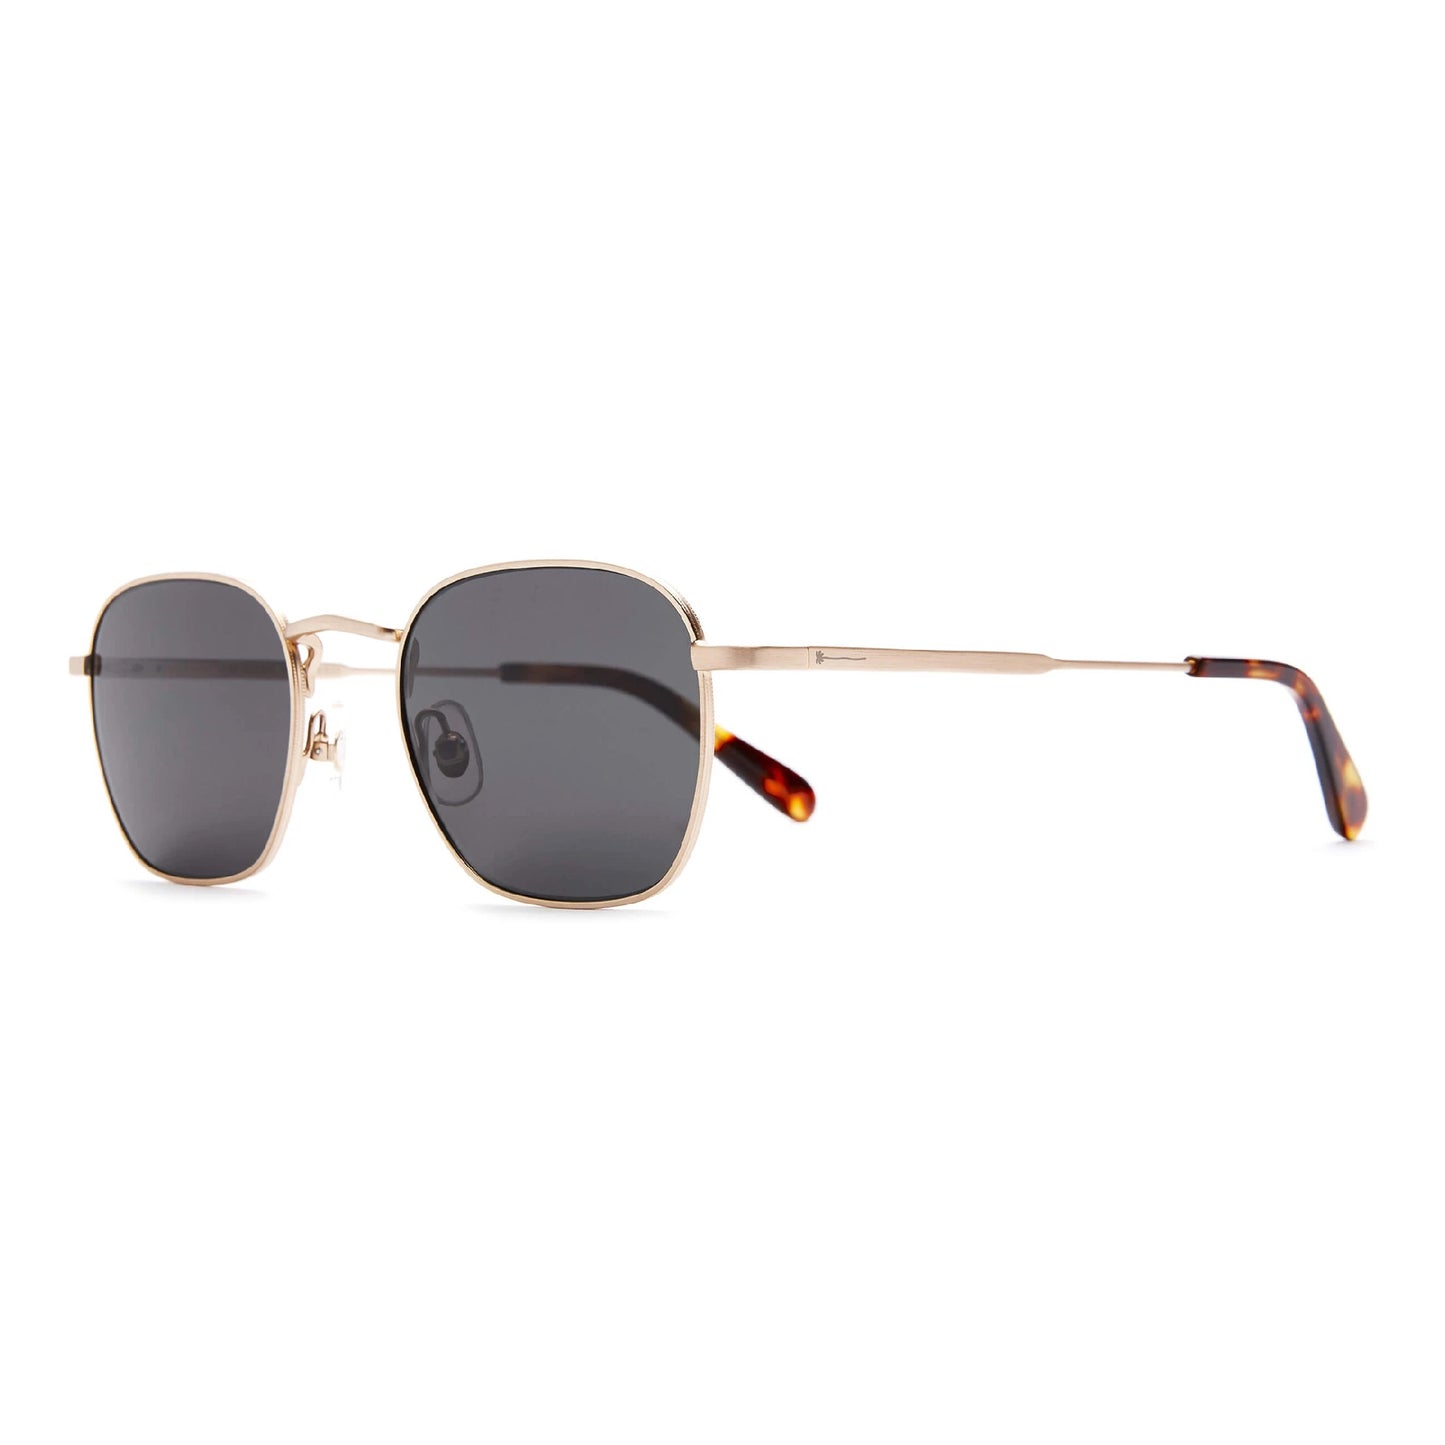 Groove Pilot Sunglasses